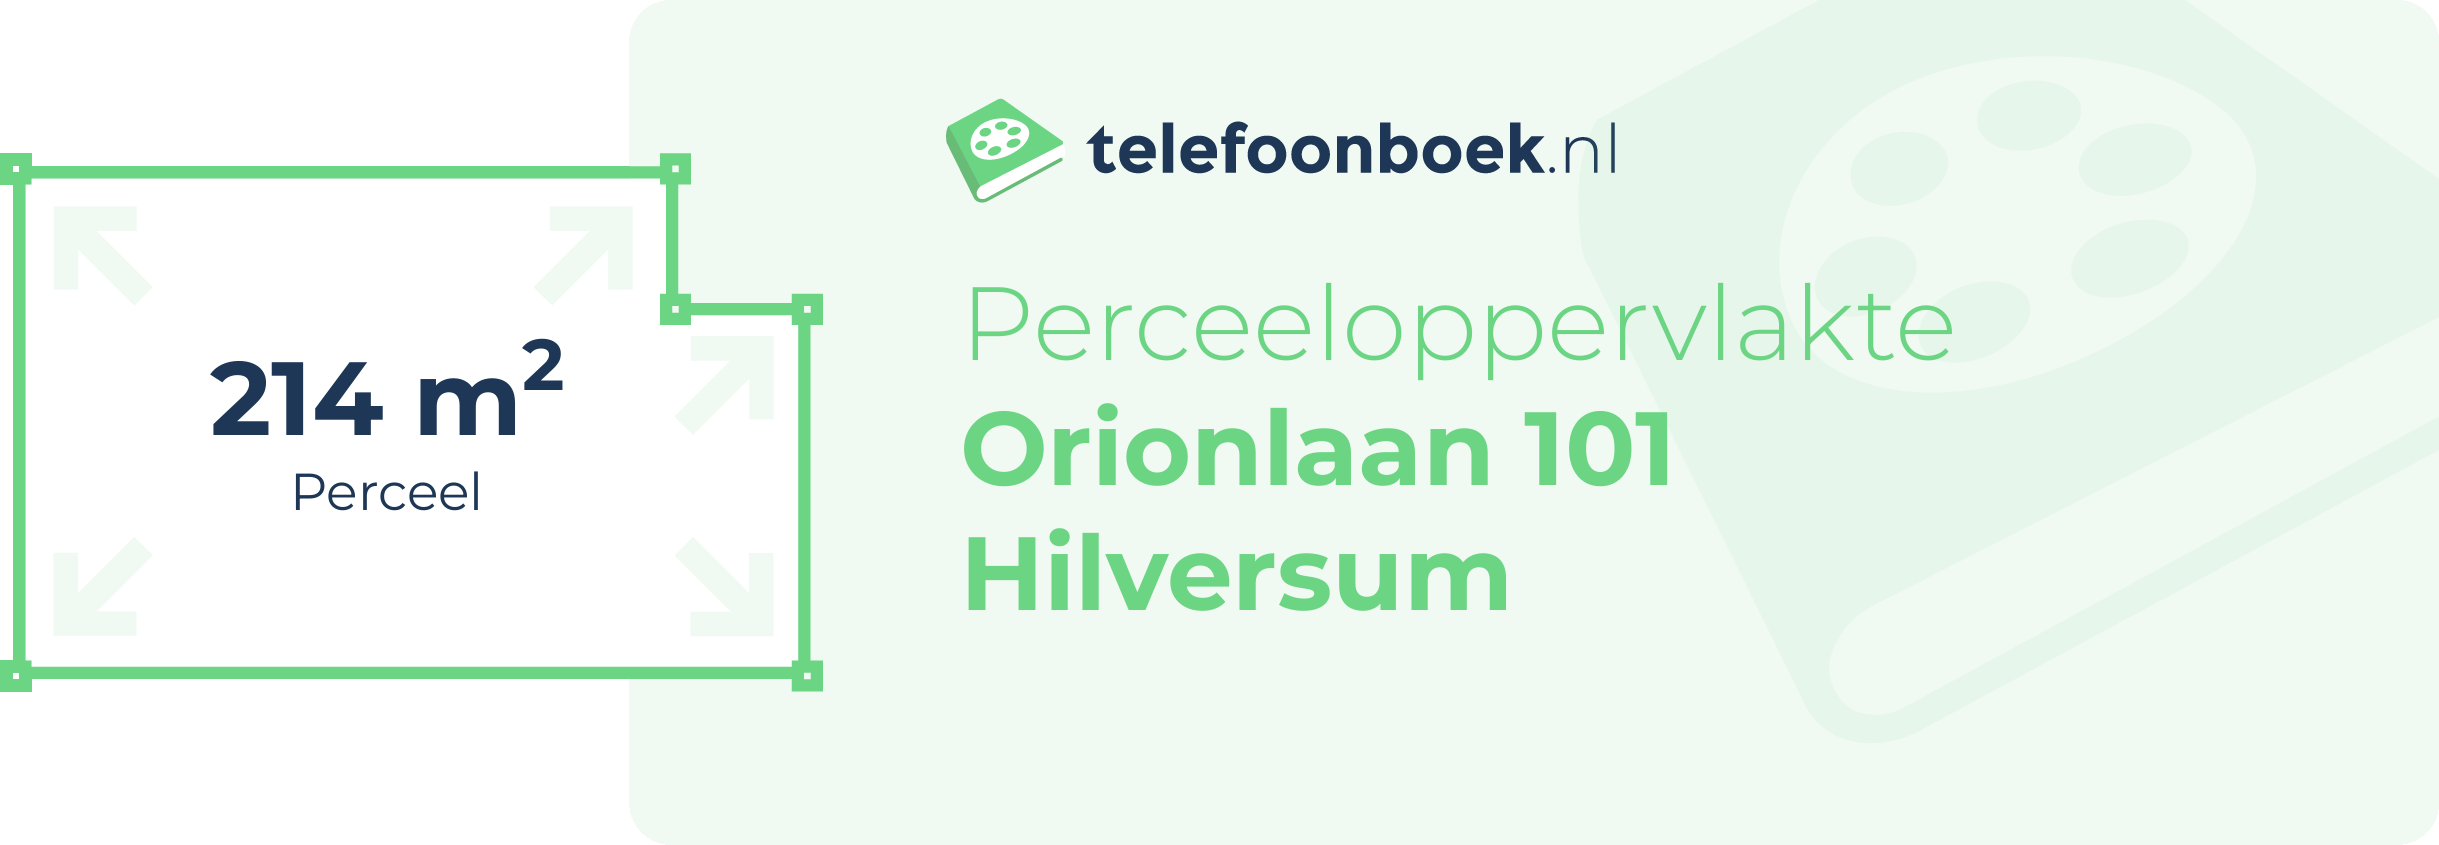 Perceeloppervlakte Orionlaan 101 Hilversum